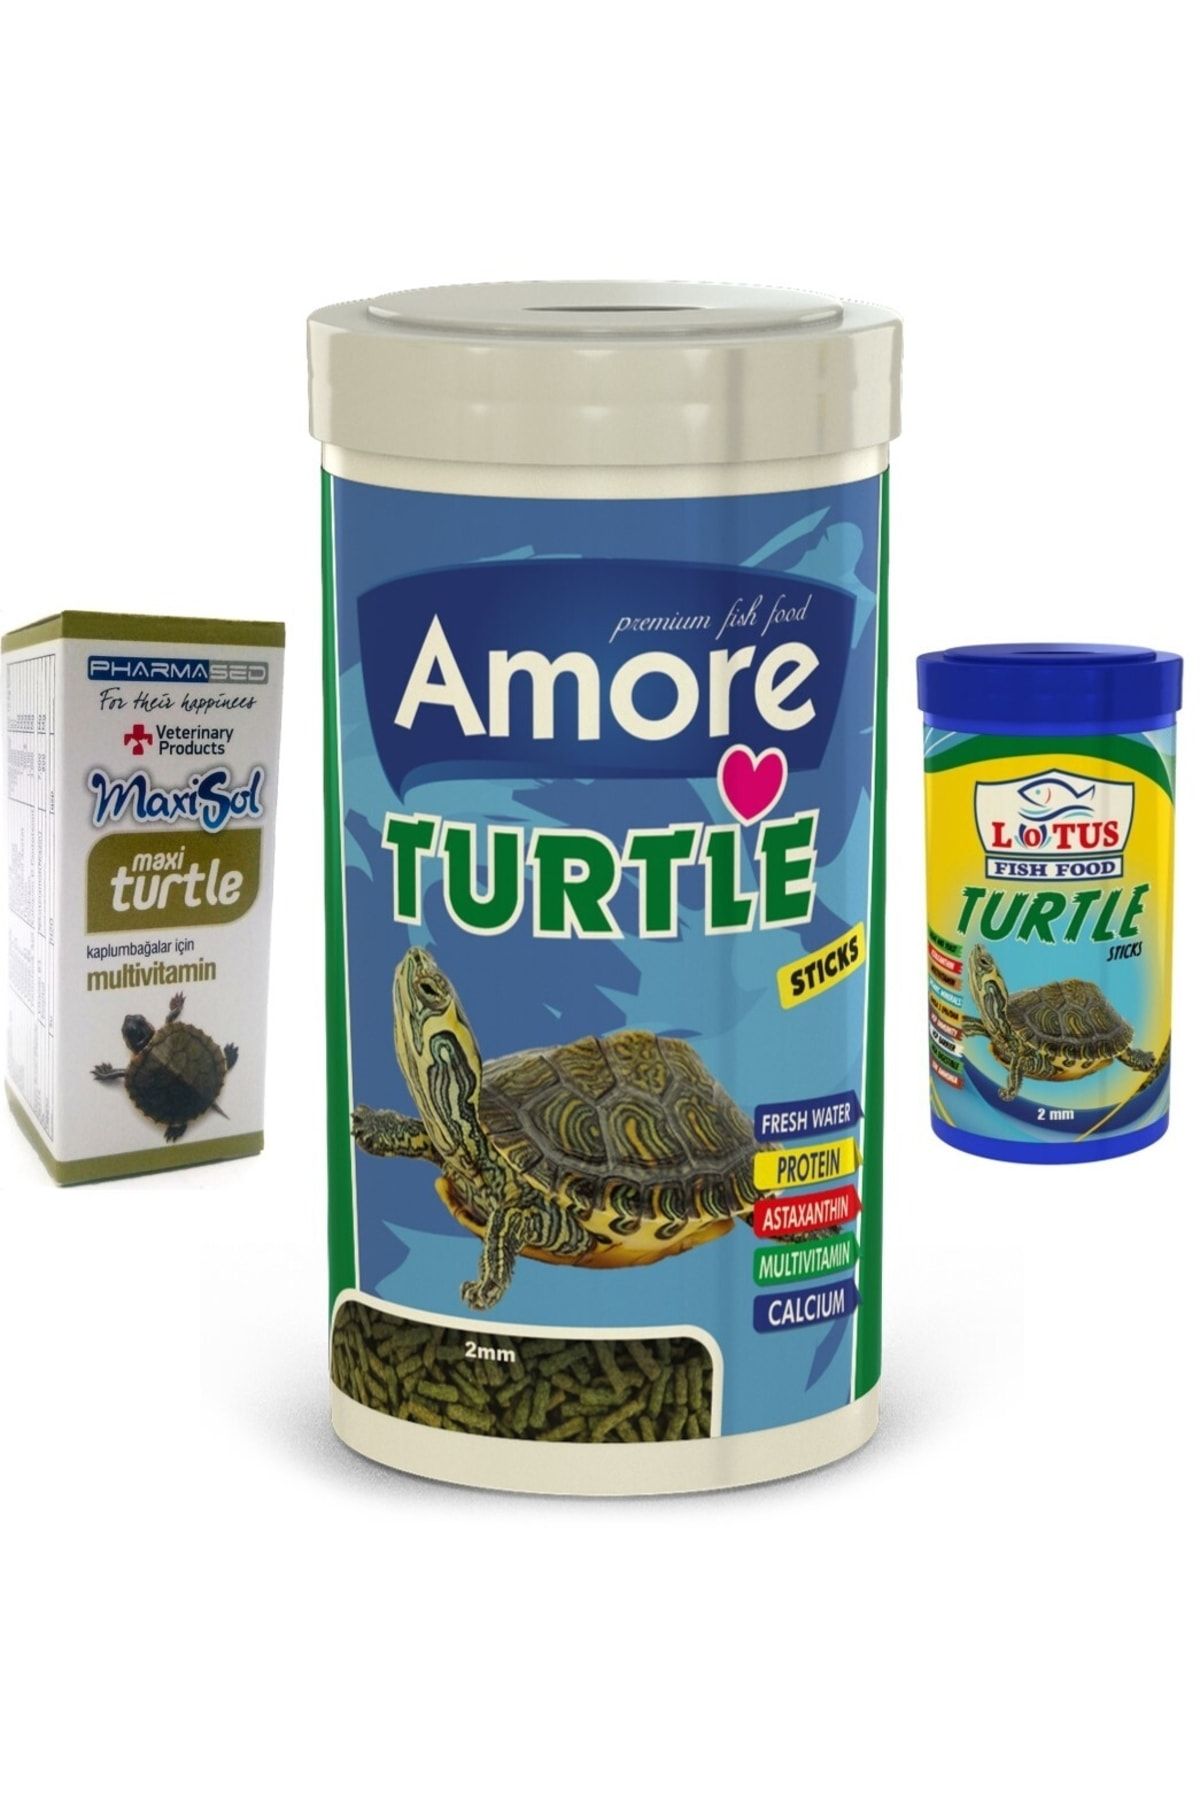 AMORE Turtle Green Sticks 1000 Ml, Lotus 100ml Kutu Kaplumbağa Yemi Ve Vitamini